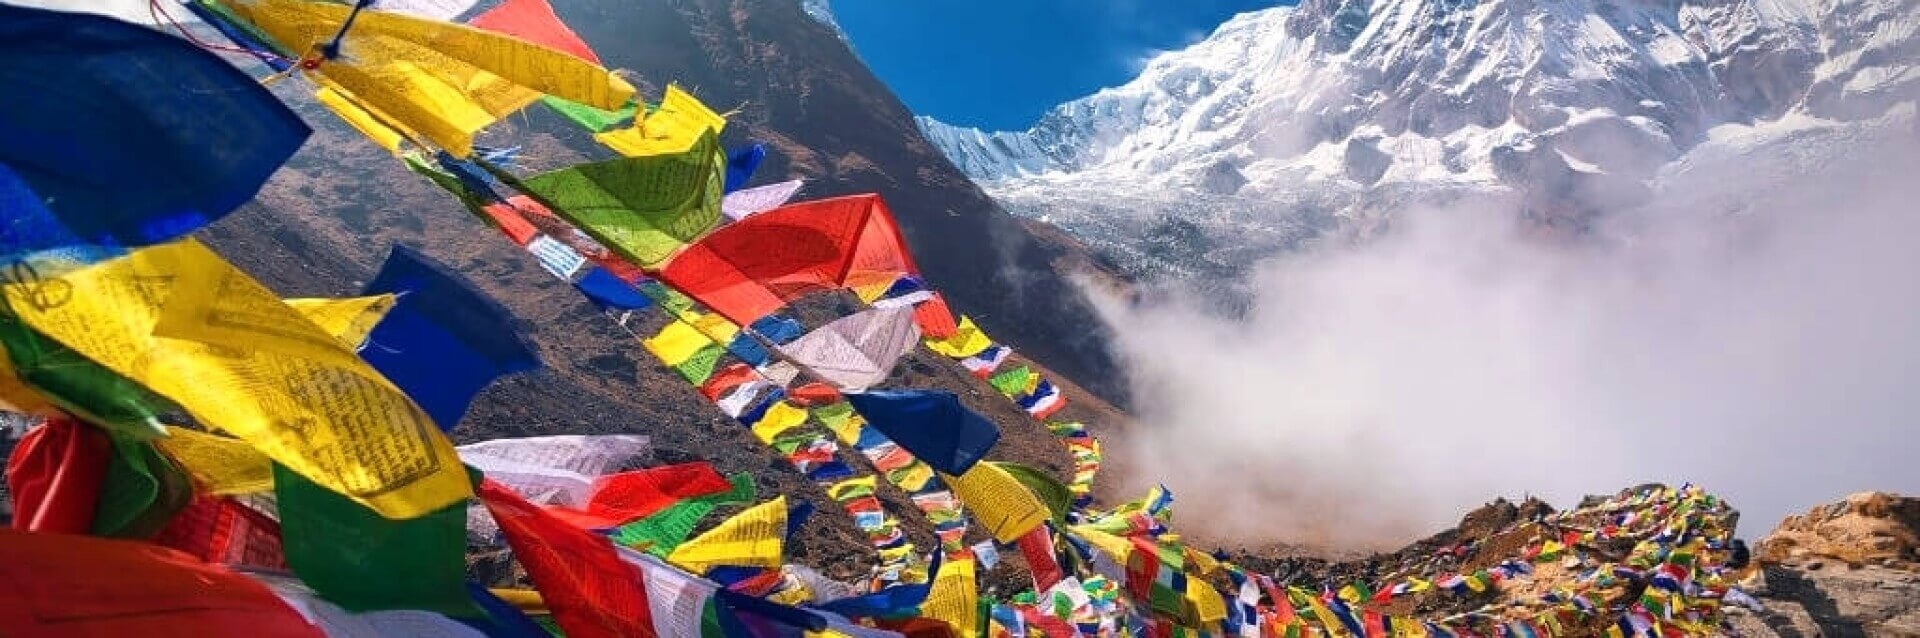 Trekking Agency in Himalaya